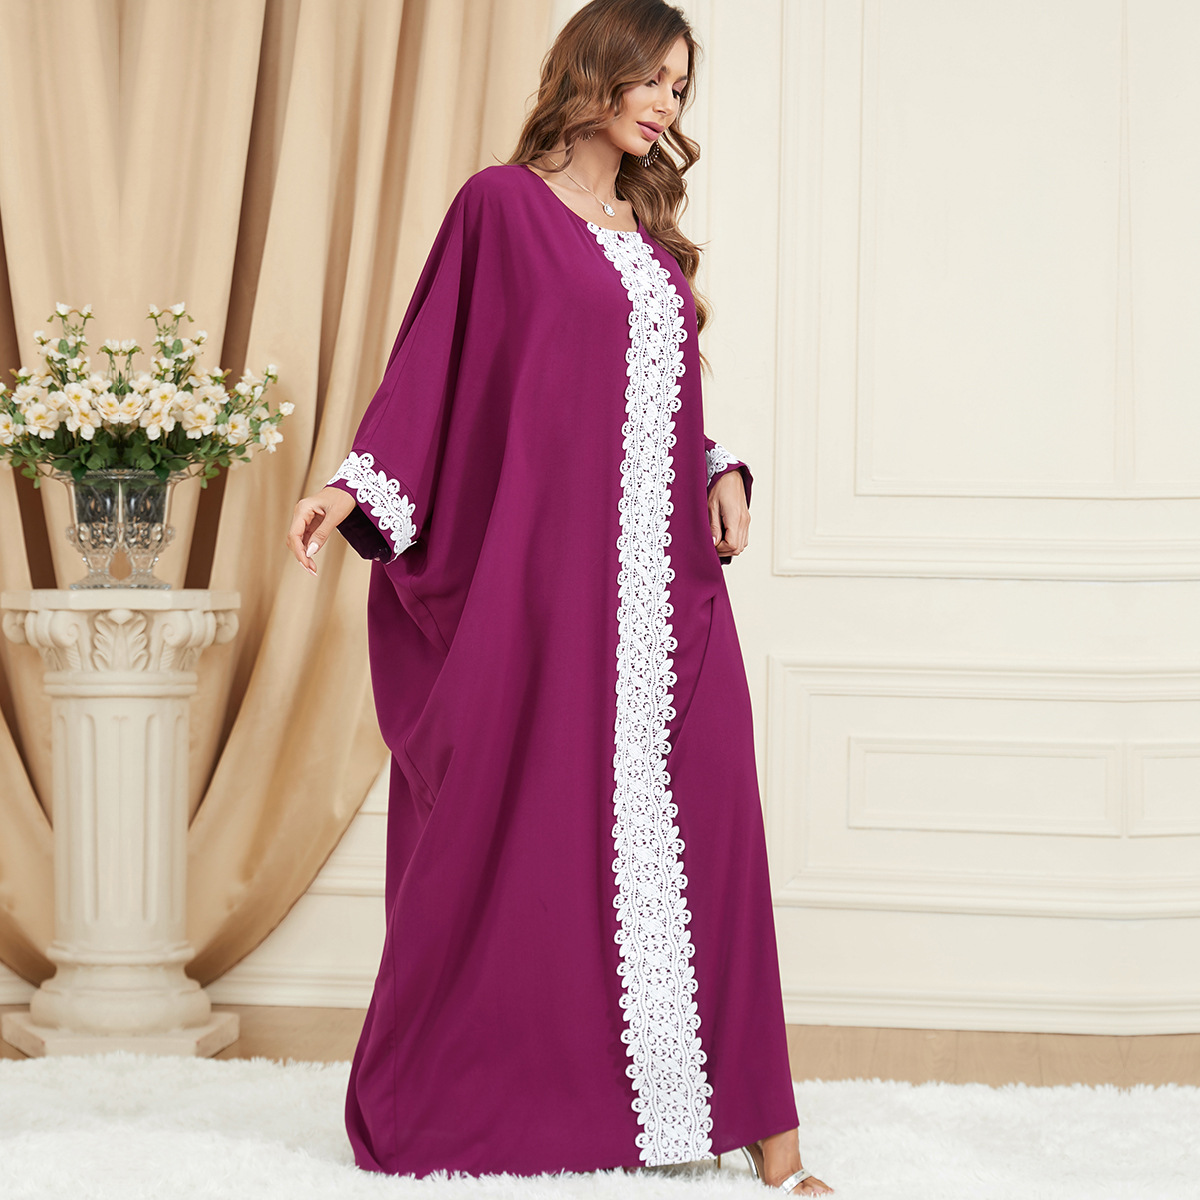 Bat sleeve large yard purple European style dress